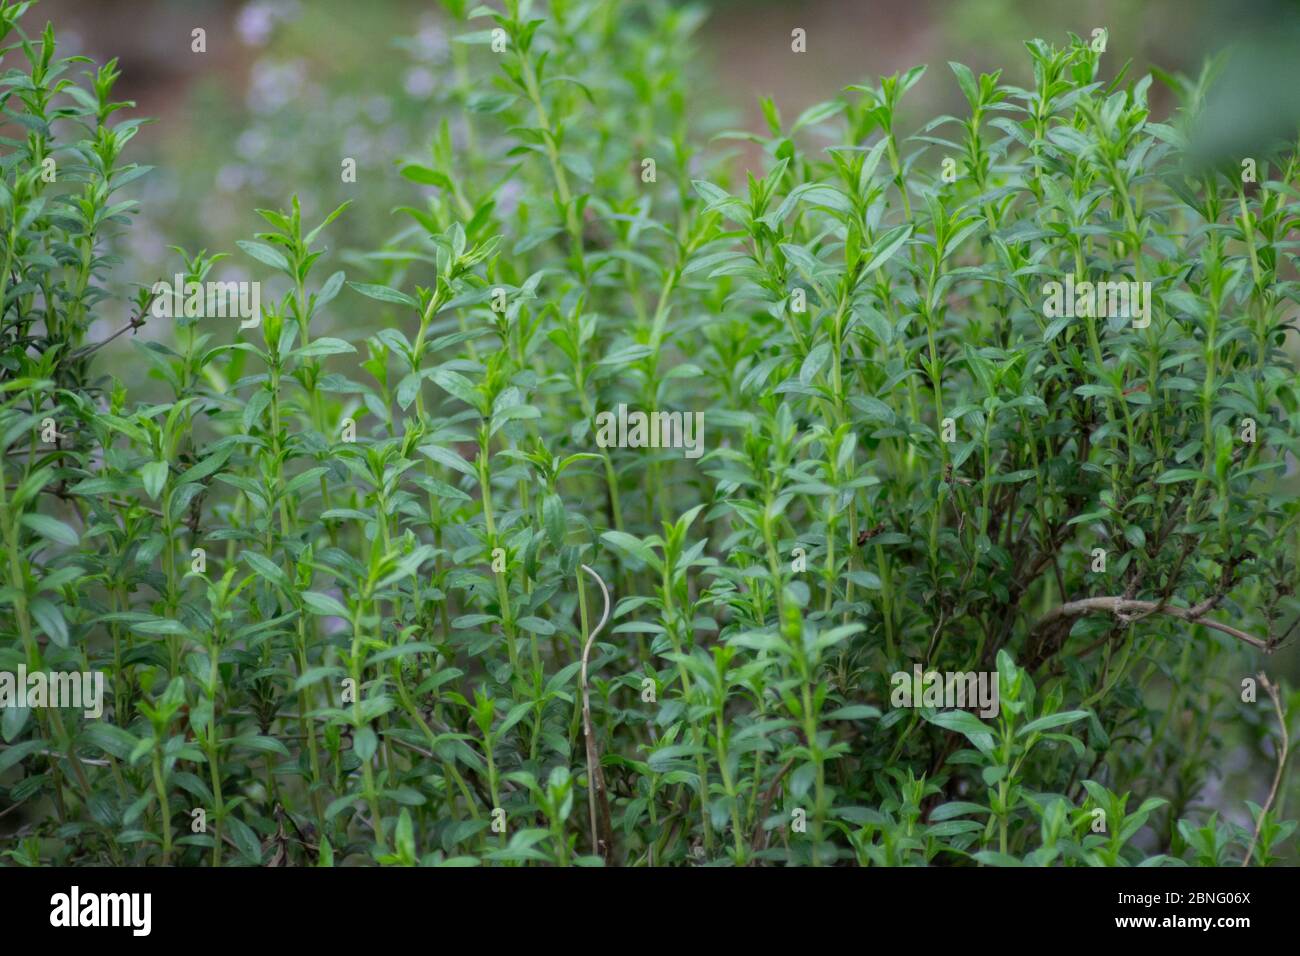 Mountain savory or Satureja montana herb in the garden, green leaves, full frame, edible herbal plant for seasoning Stock Photo